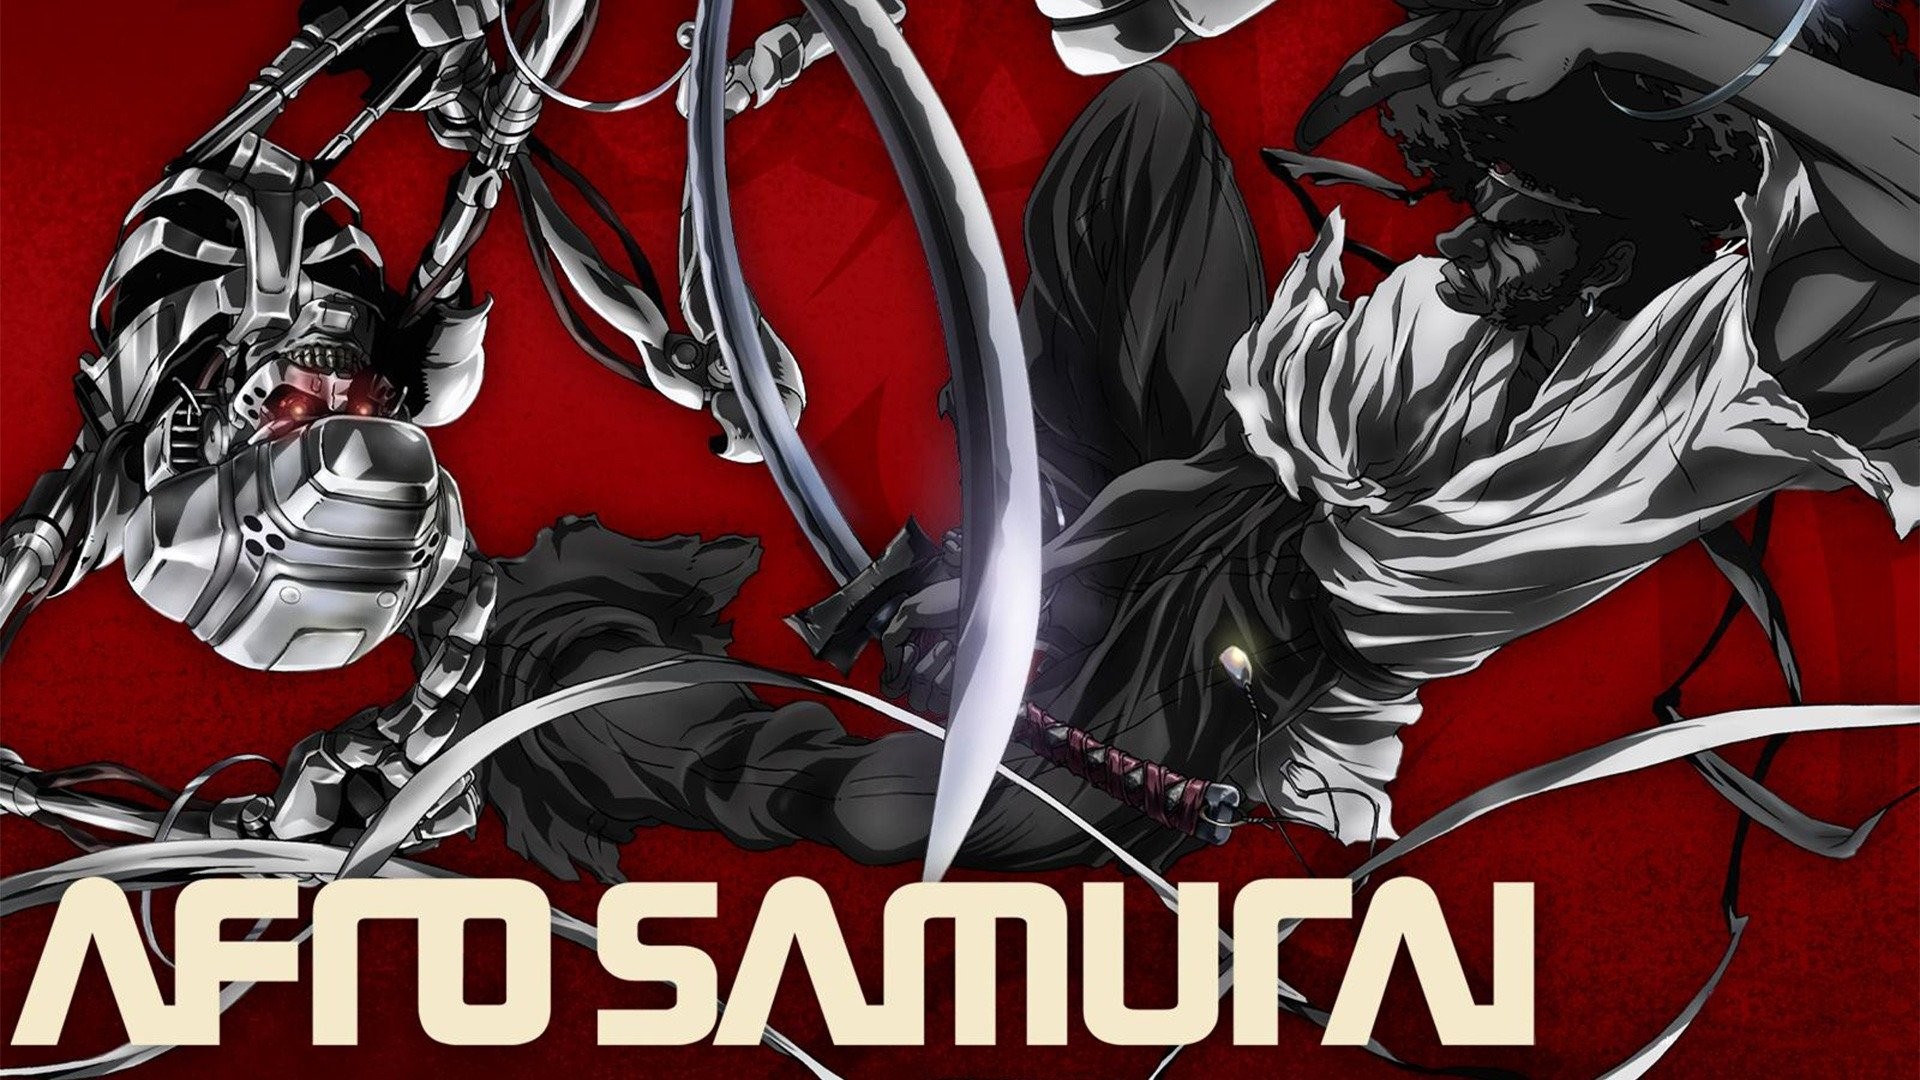 Afro Samurai Episode 1 Watch Online 